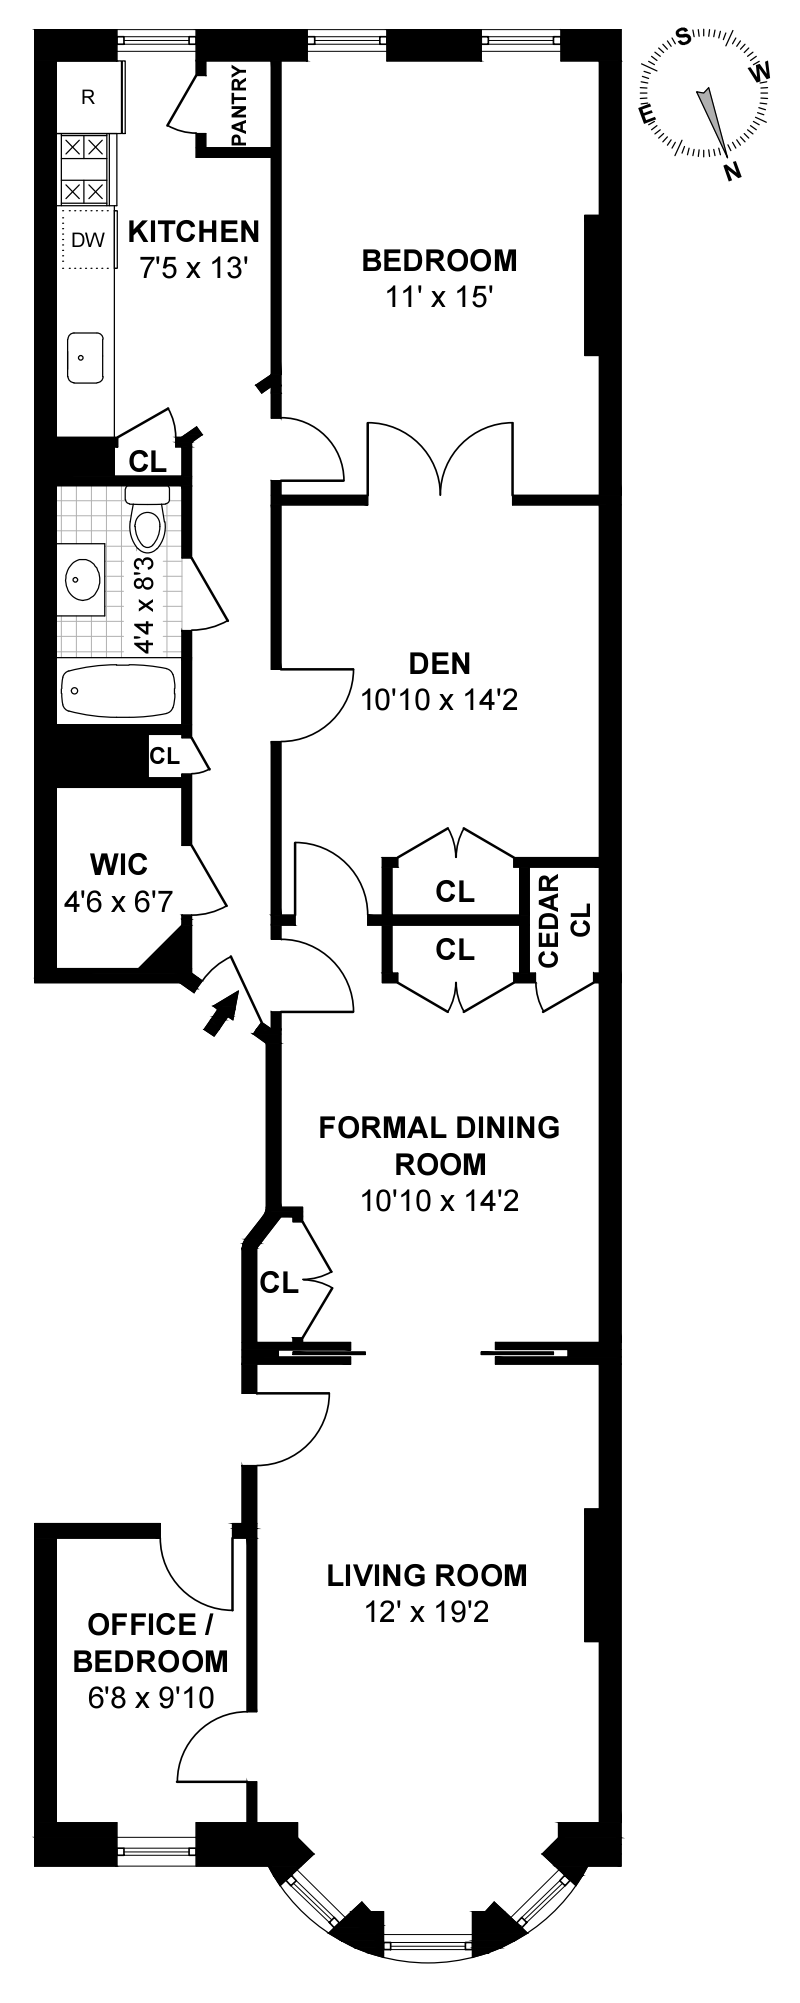 Floorplan for 764 Union Street, 4